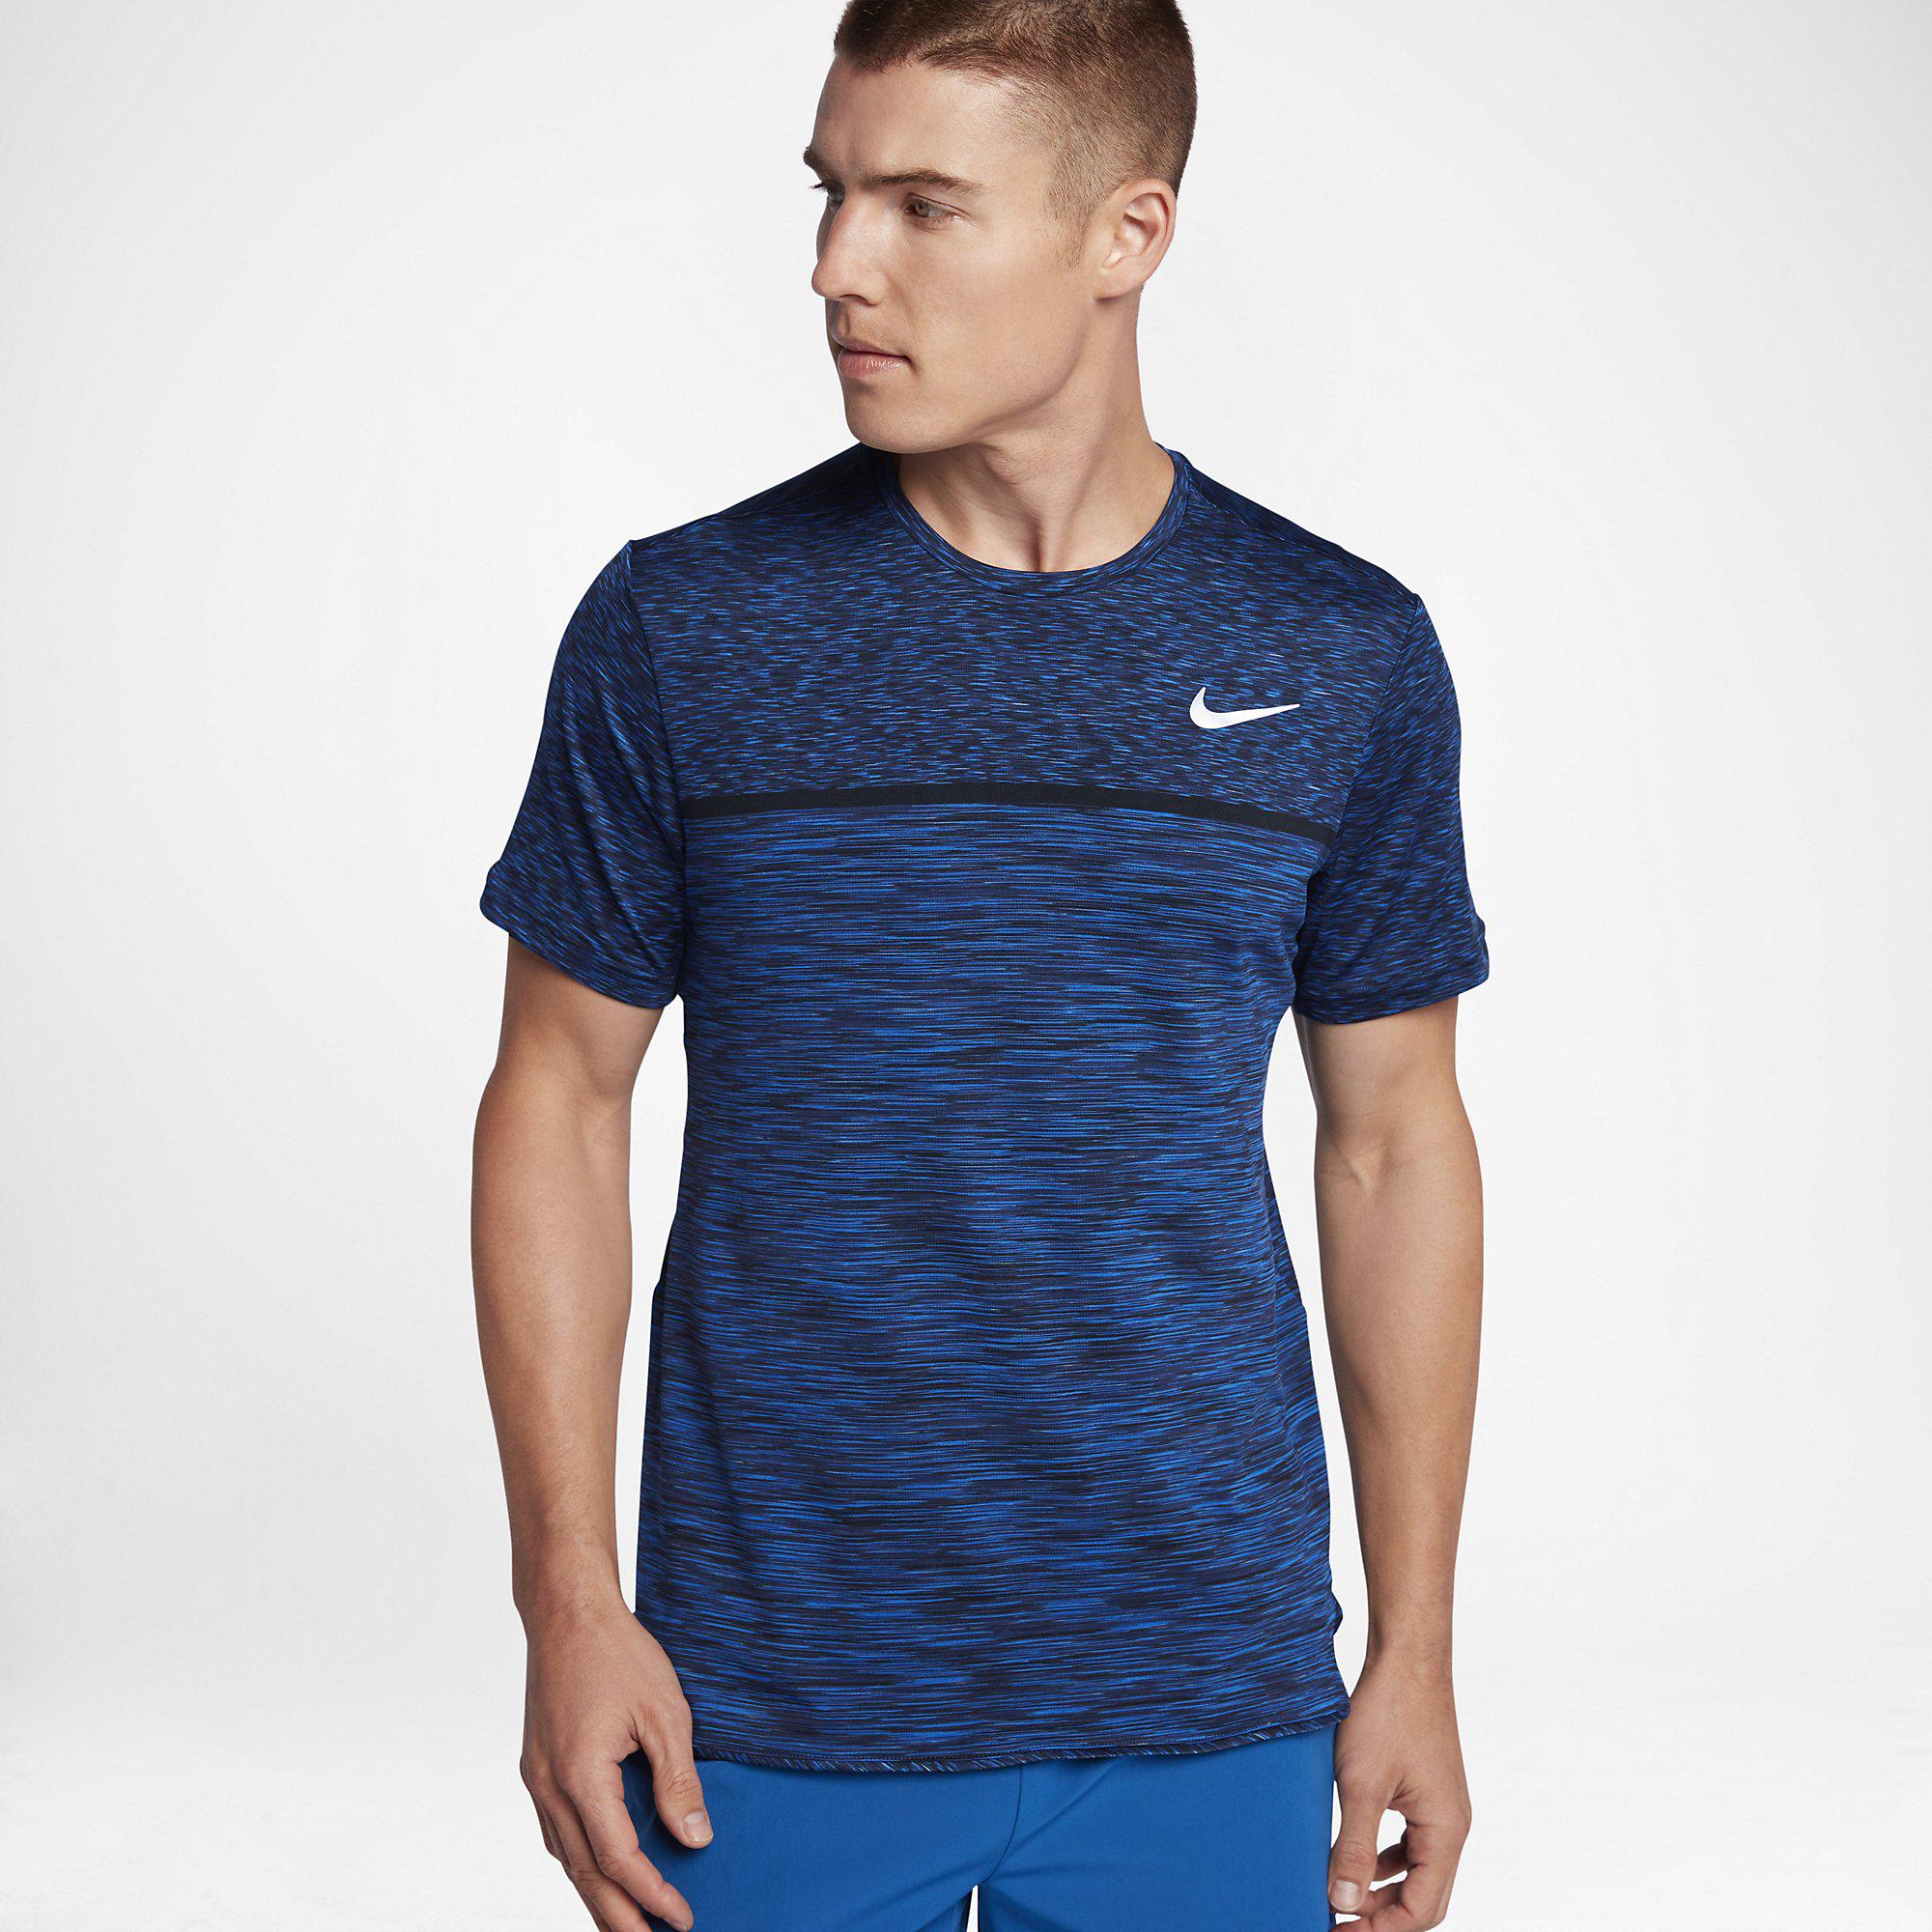 Nike Mens Court Dry Challenger Tennis Top - Blue Jay/White - Tennisnuts.com